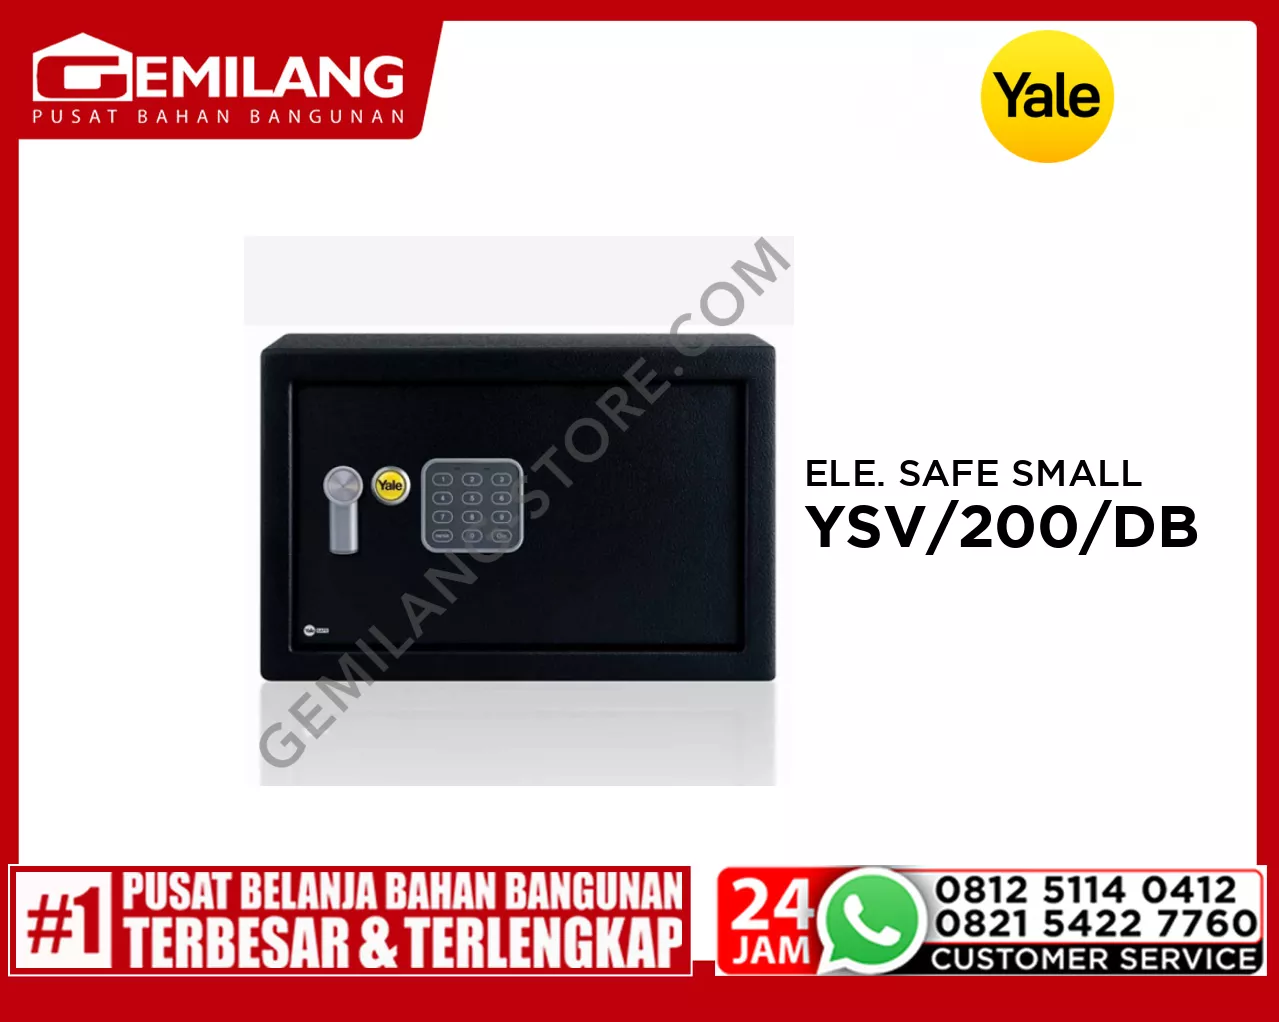 YALE ELECTRONIC SAFE SMALL YSV/200/DB/1